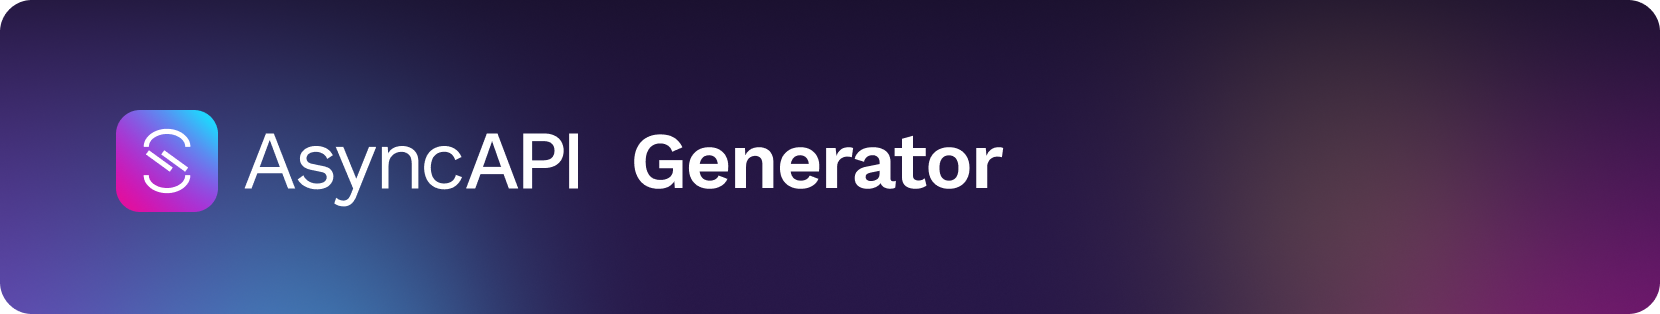 asyncapi-generator.png